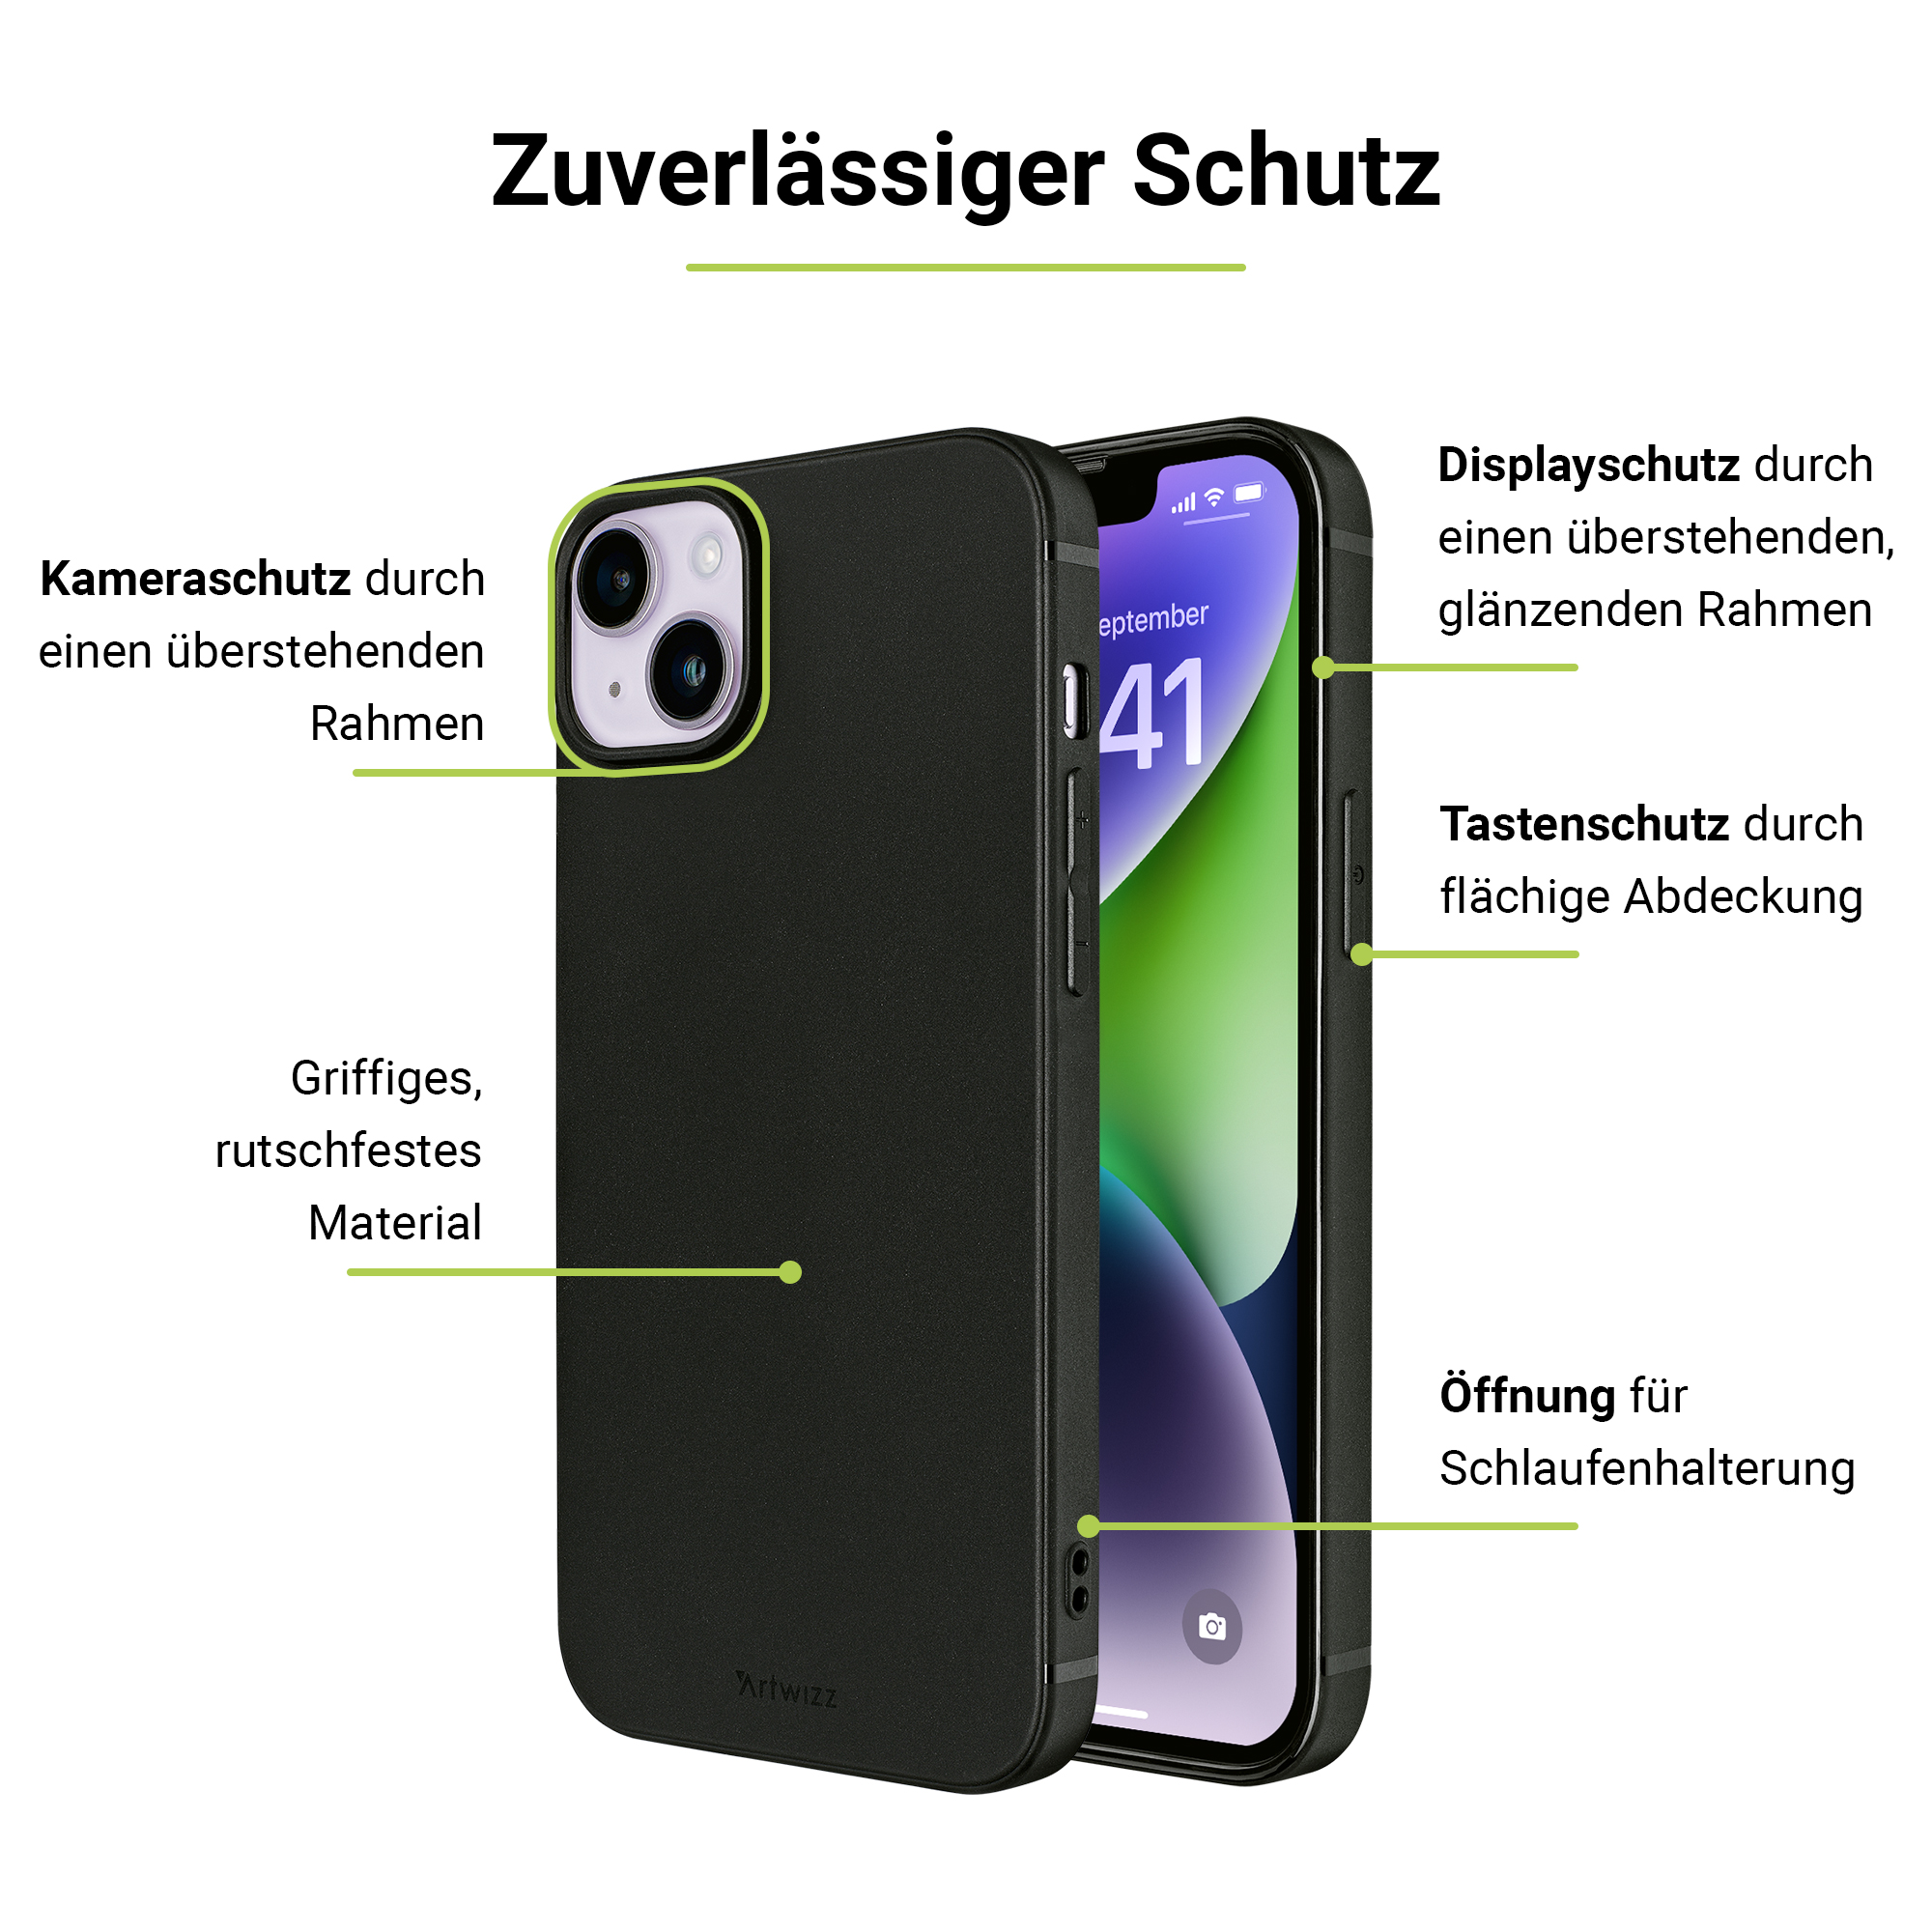 ARTWIZZ TPU Case, Apple, 14 Backcover, iPhone Schwarz Plus